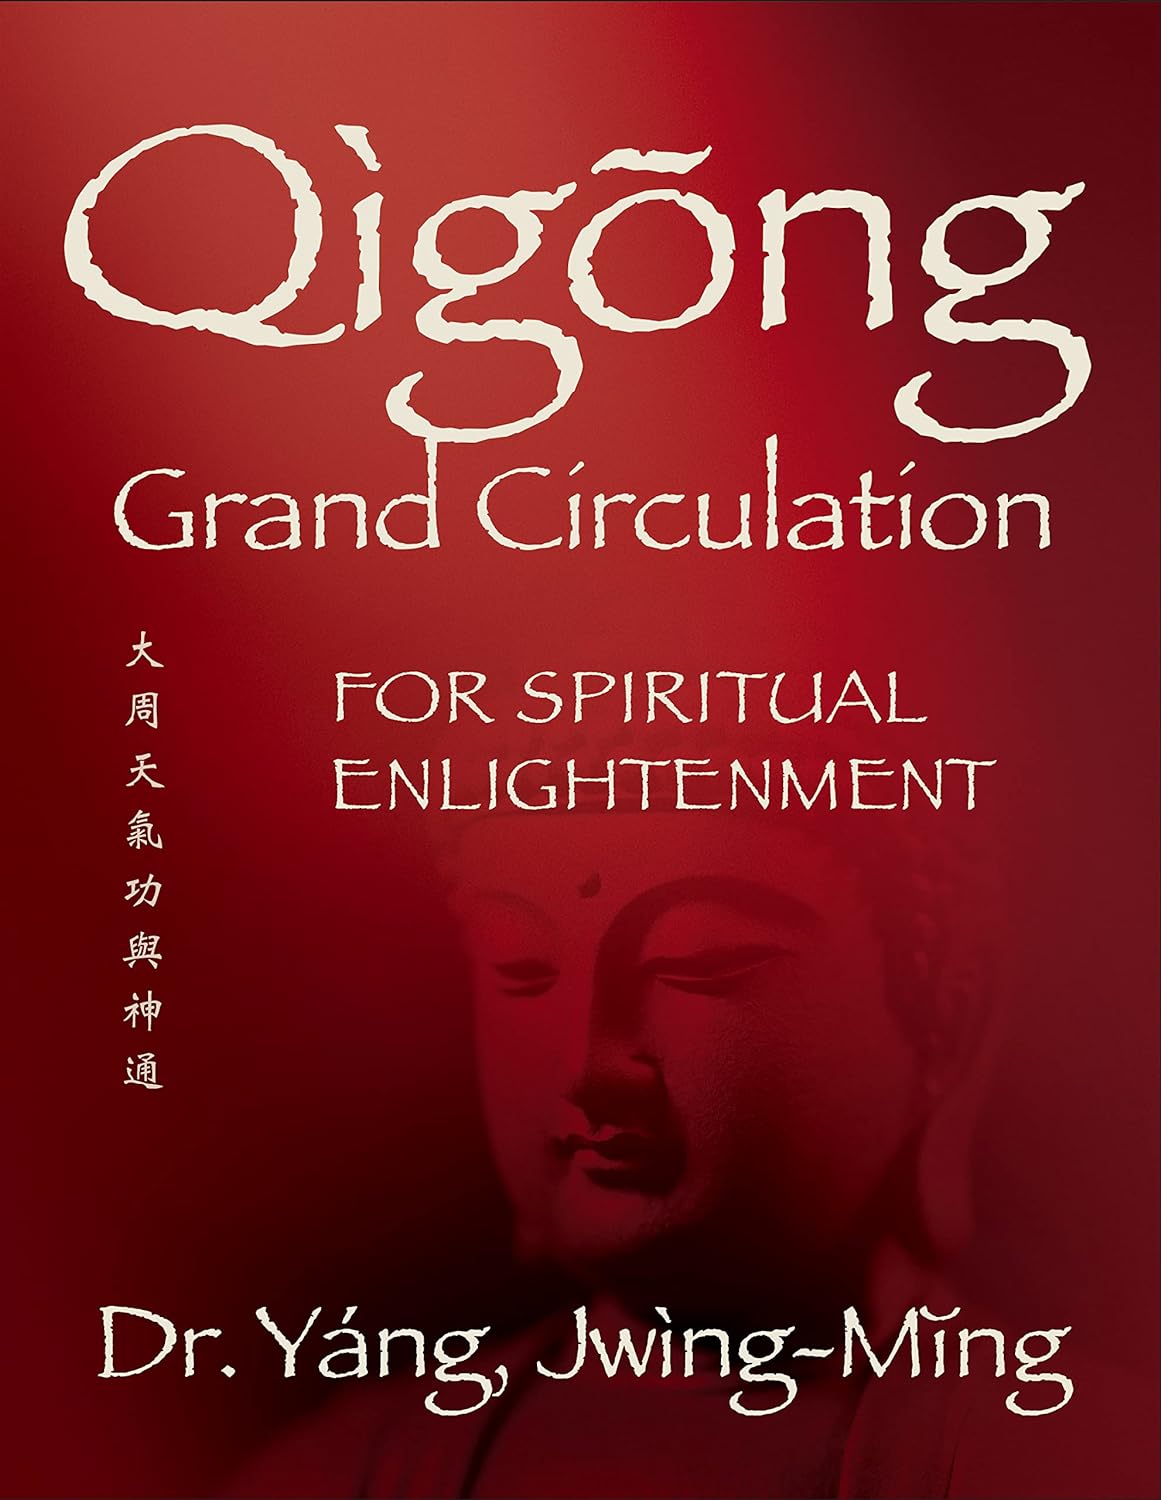 Qigong Grand Circulation For Spiritual Enlightenment (Qigong Foundation) Book by Dr Yang, Jwing-Ming